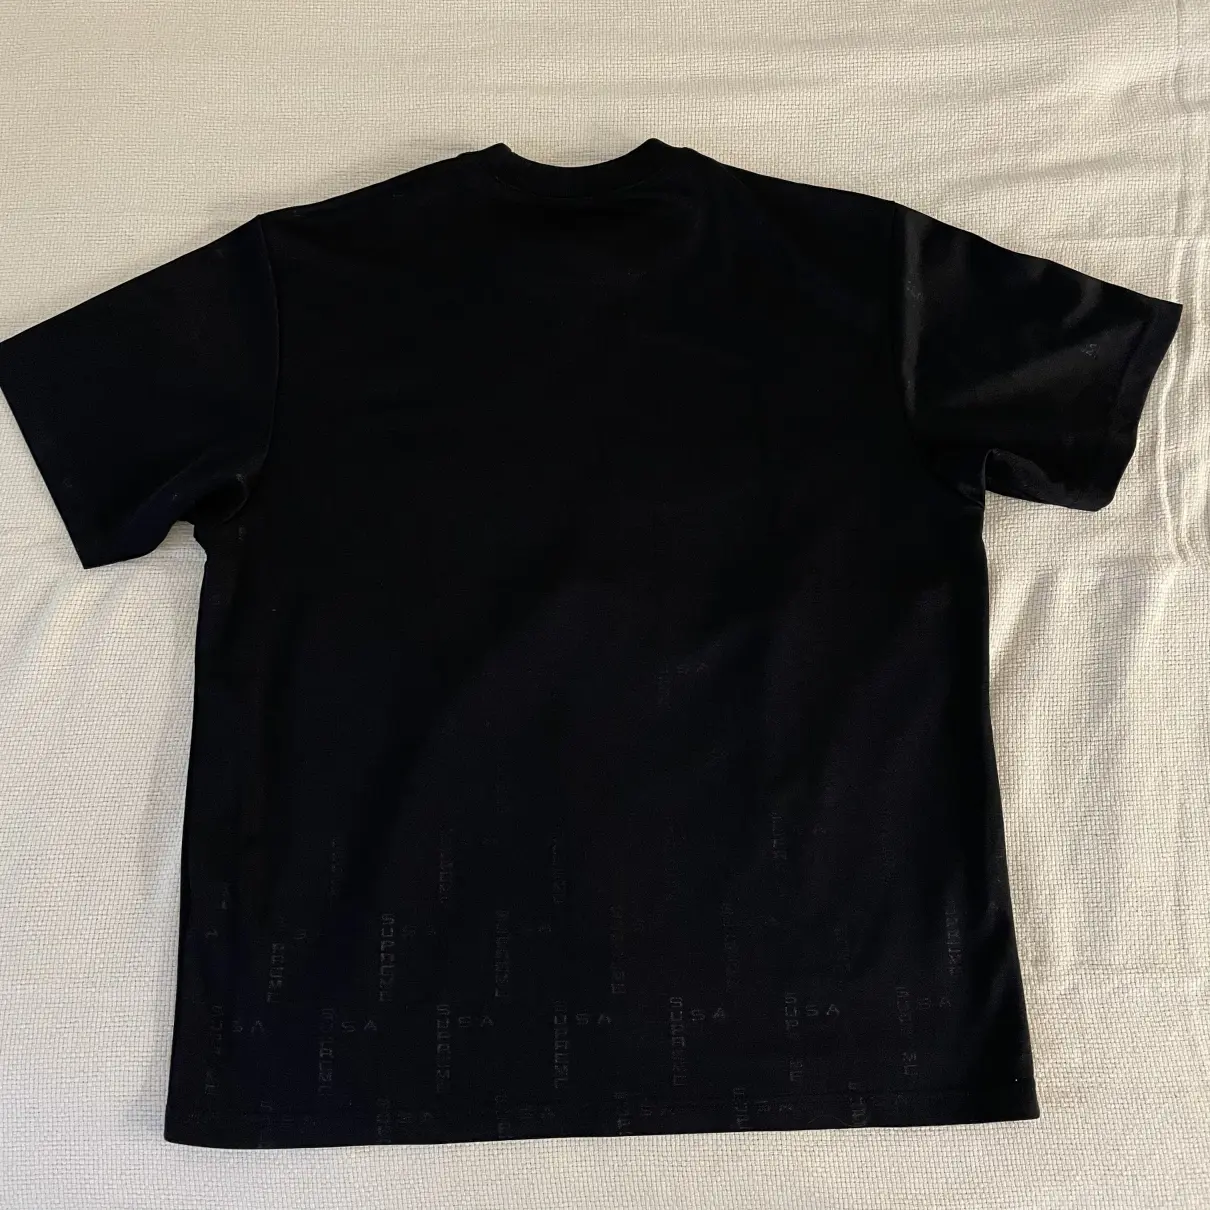 Buy Supreme Black Polyester T-shirt online